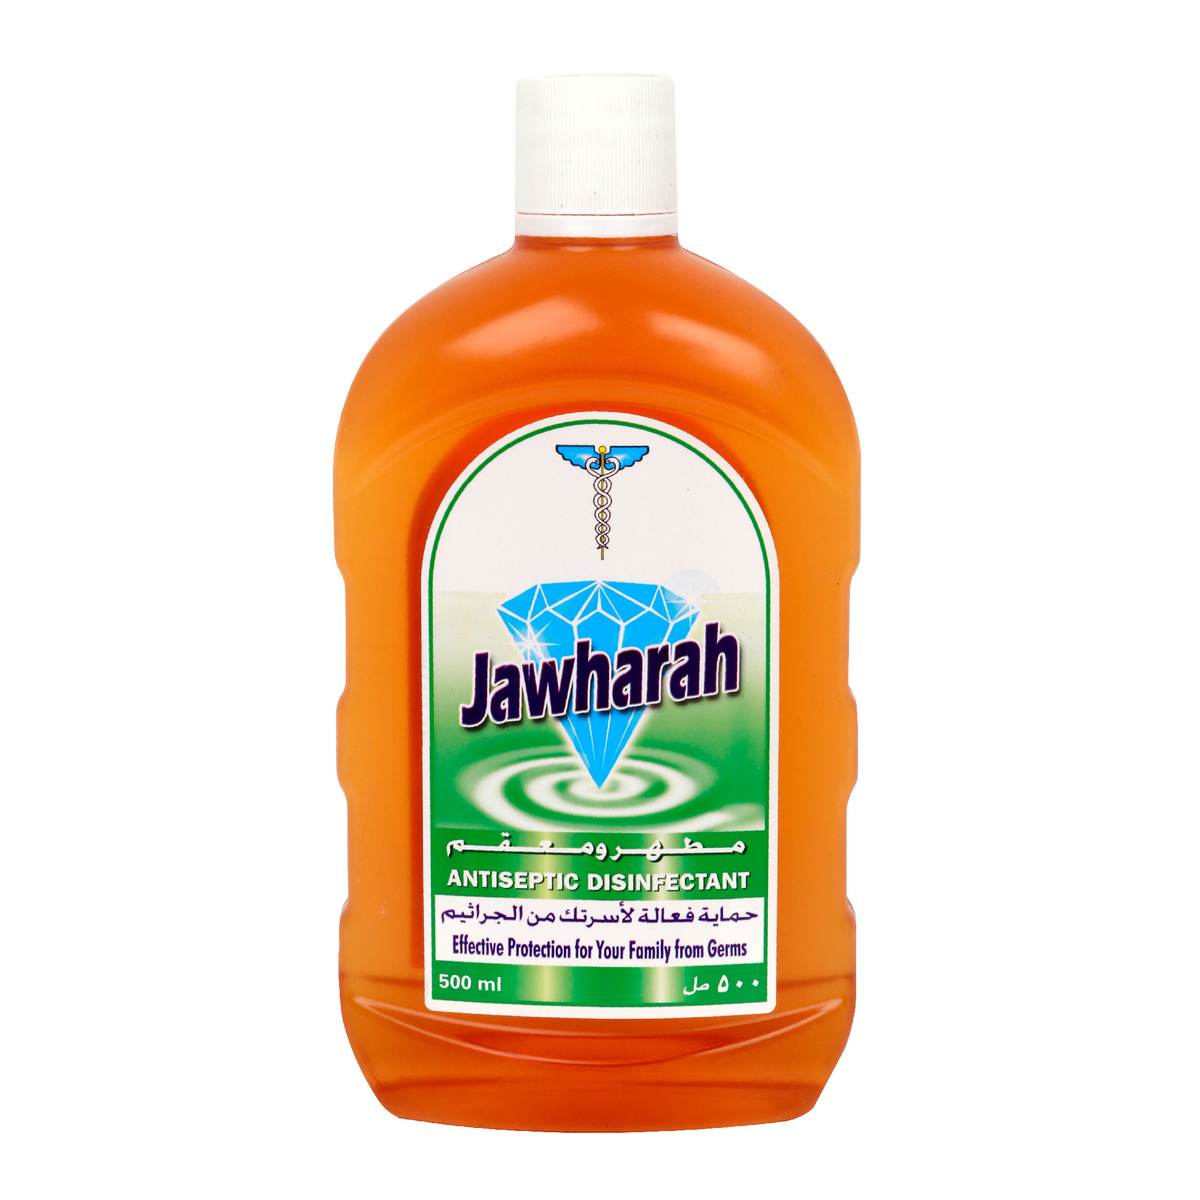 Jawharah Antiseptic Disinfectant 500ml